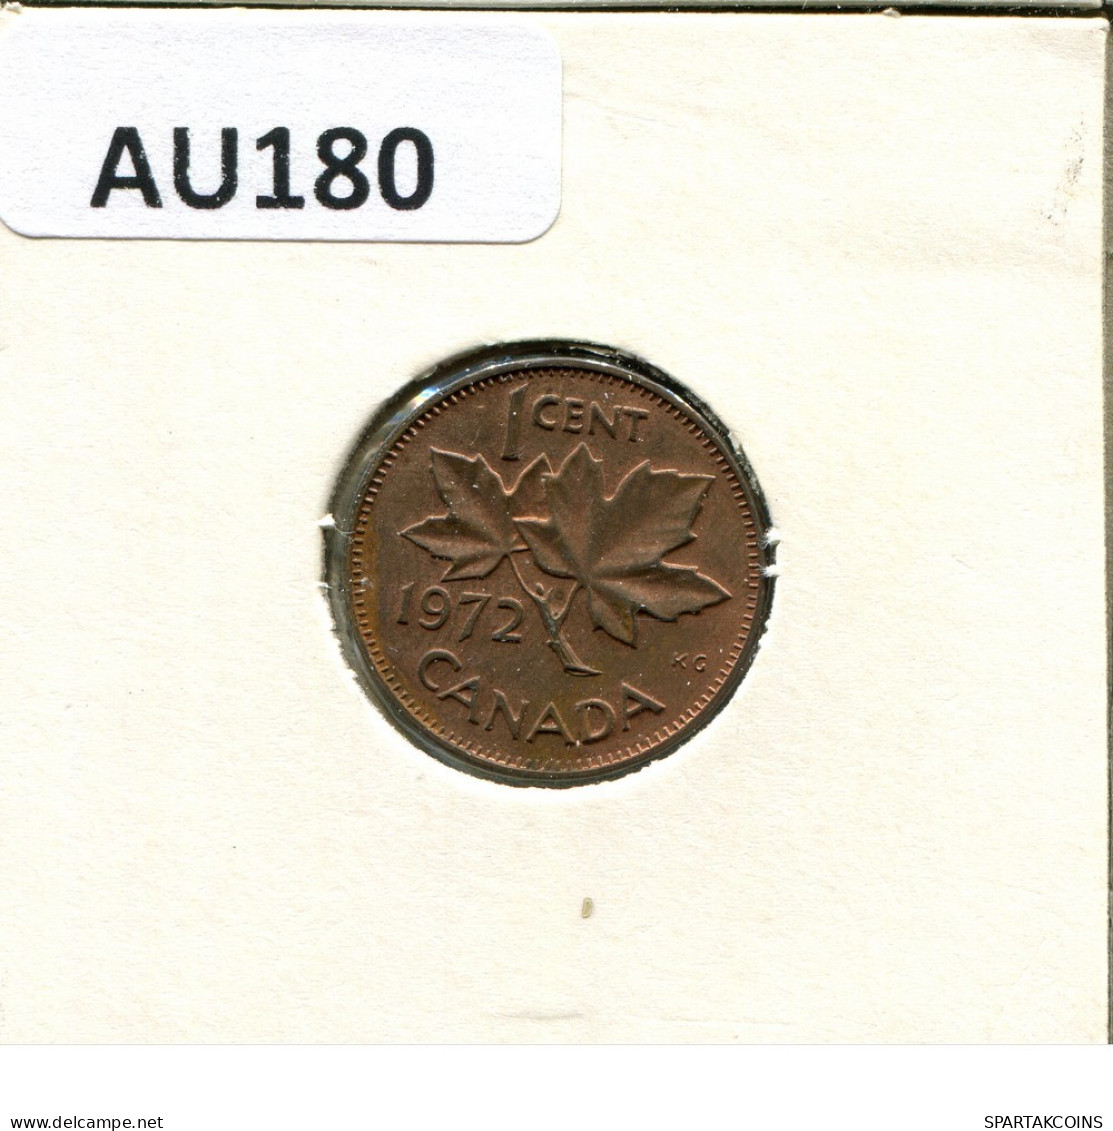 1 CENT 1972 KANADA CANADA Münze #AU180.D.A - Canada